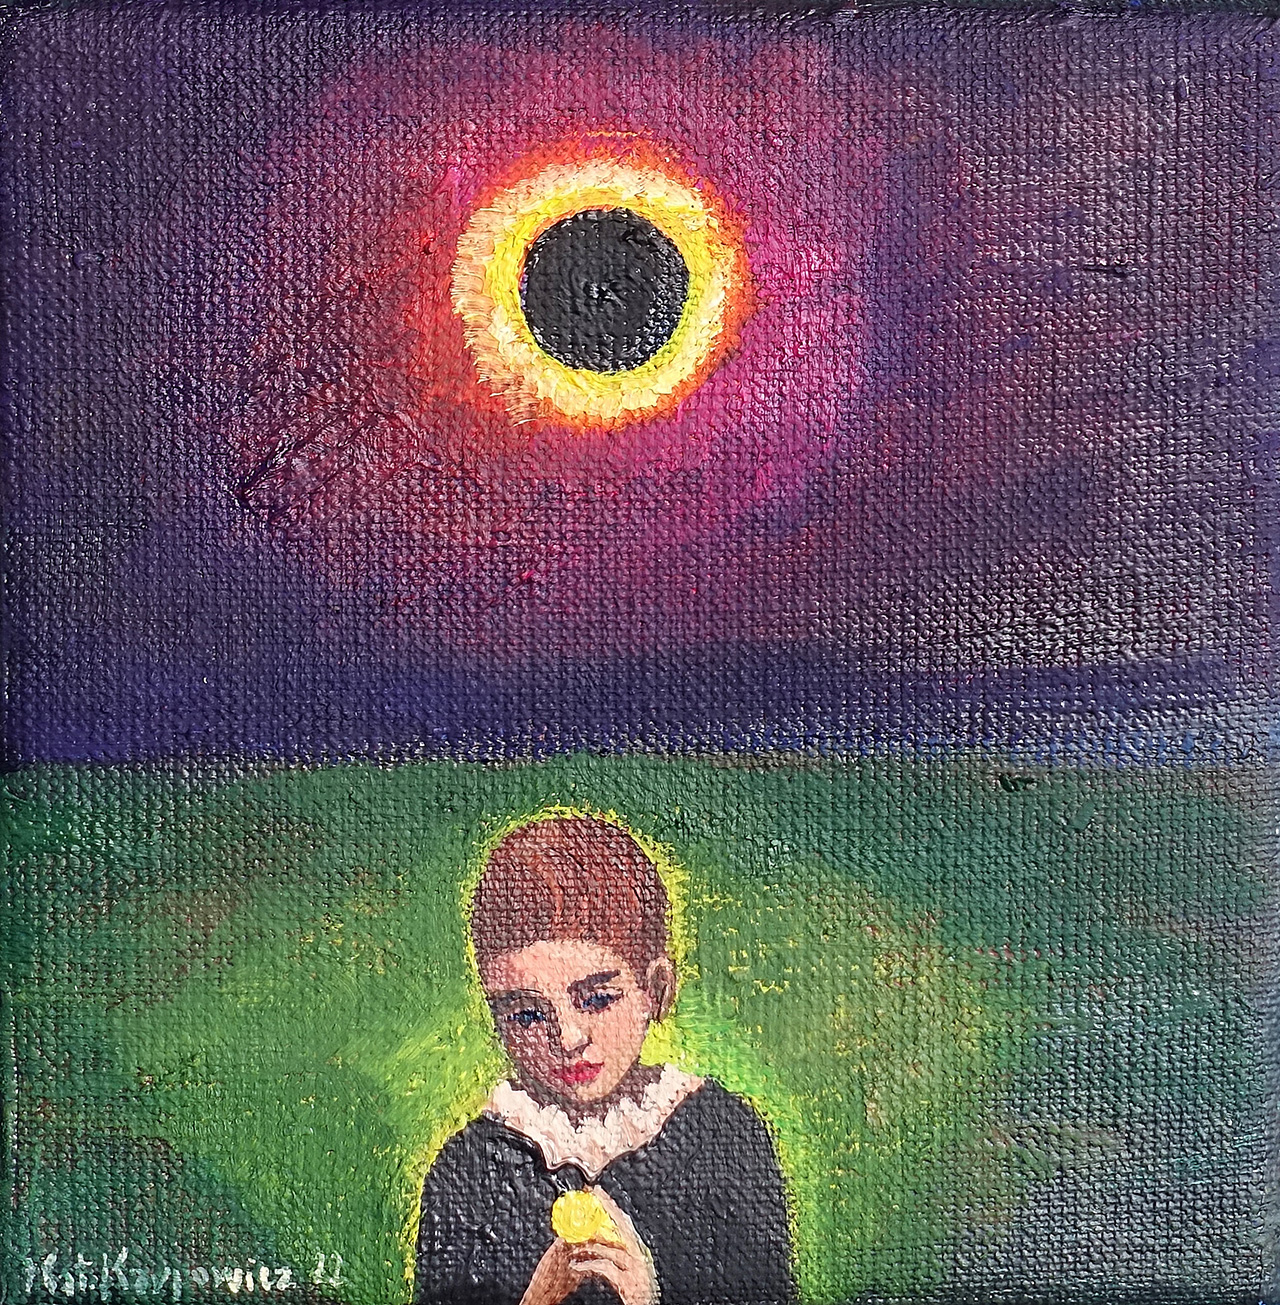 Katarzyna Karpowicz - Little gift (Black hole sun) (Oil on Canvas | Größe: 15 x 15 cm | Preis: 6000 PLN)